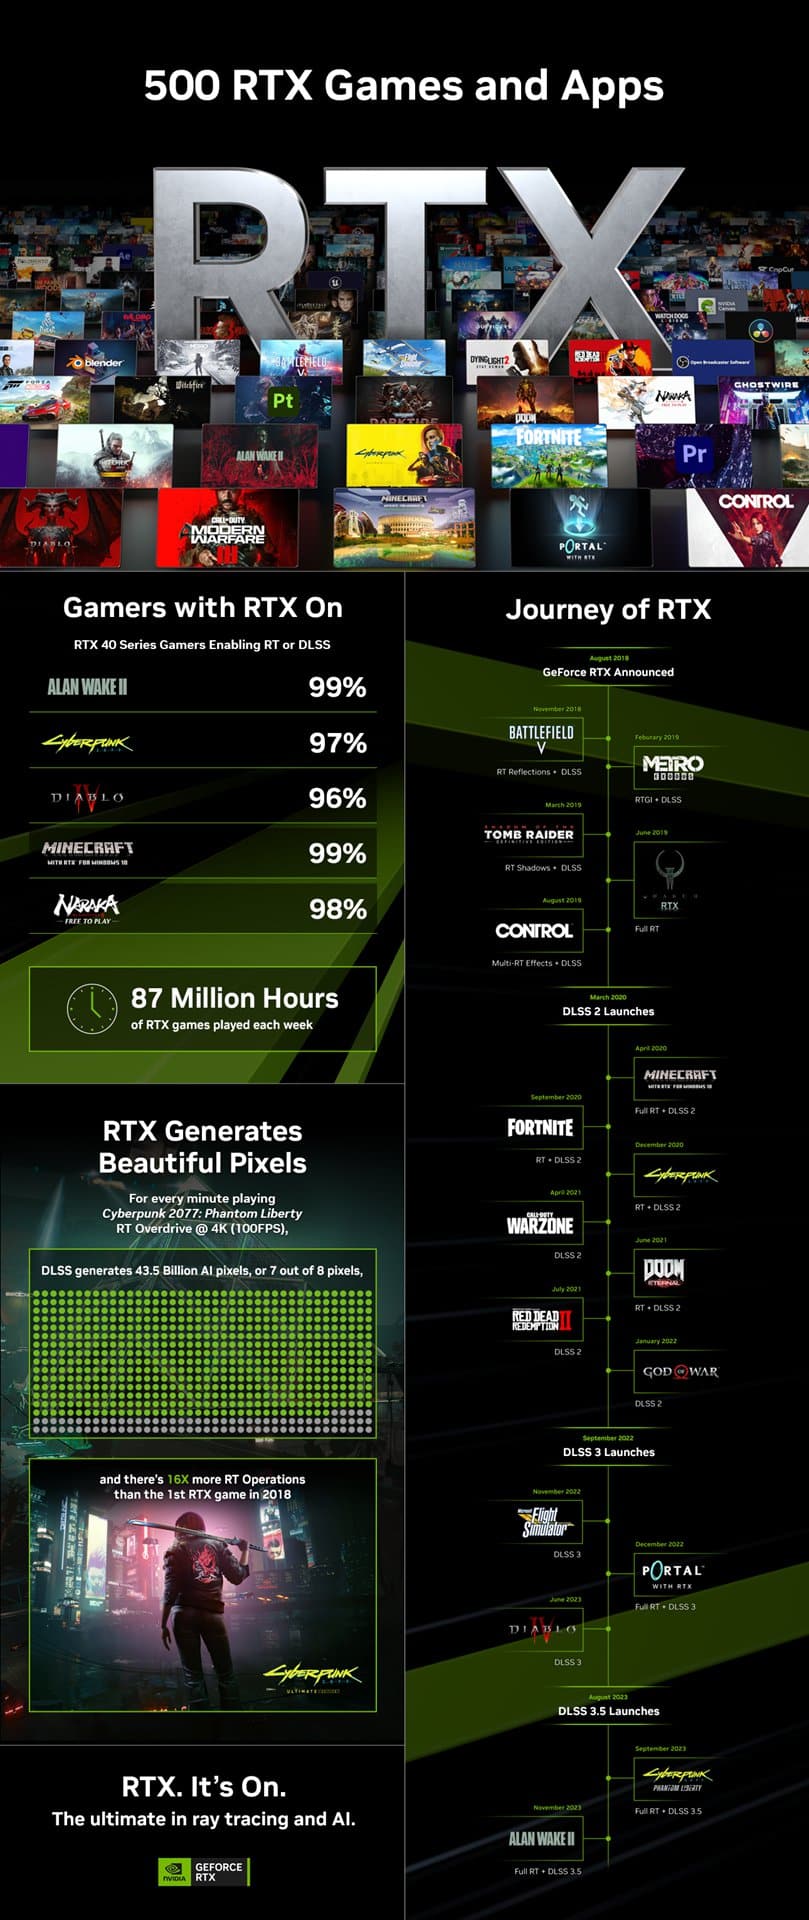 【NVIDIA-新聞照片二】NVIDIA-歡慶-RTXON-遊戲和應用程式達到500款的里程碑。